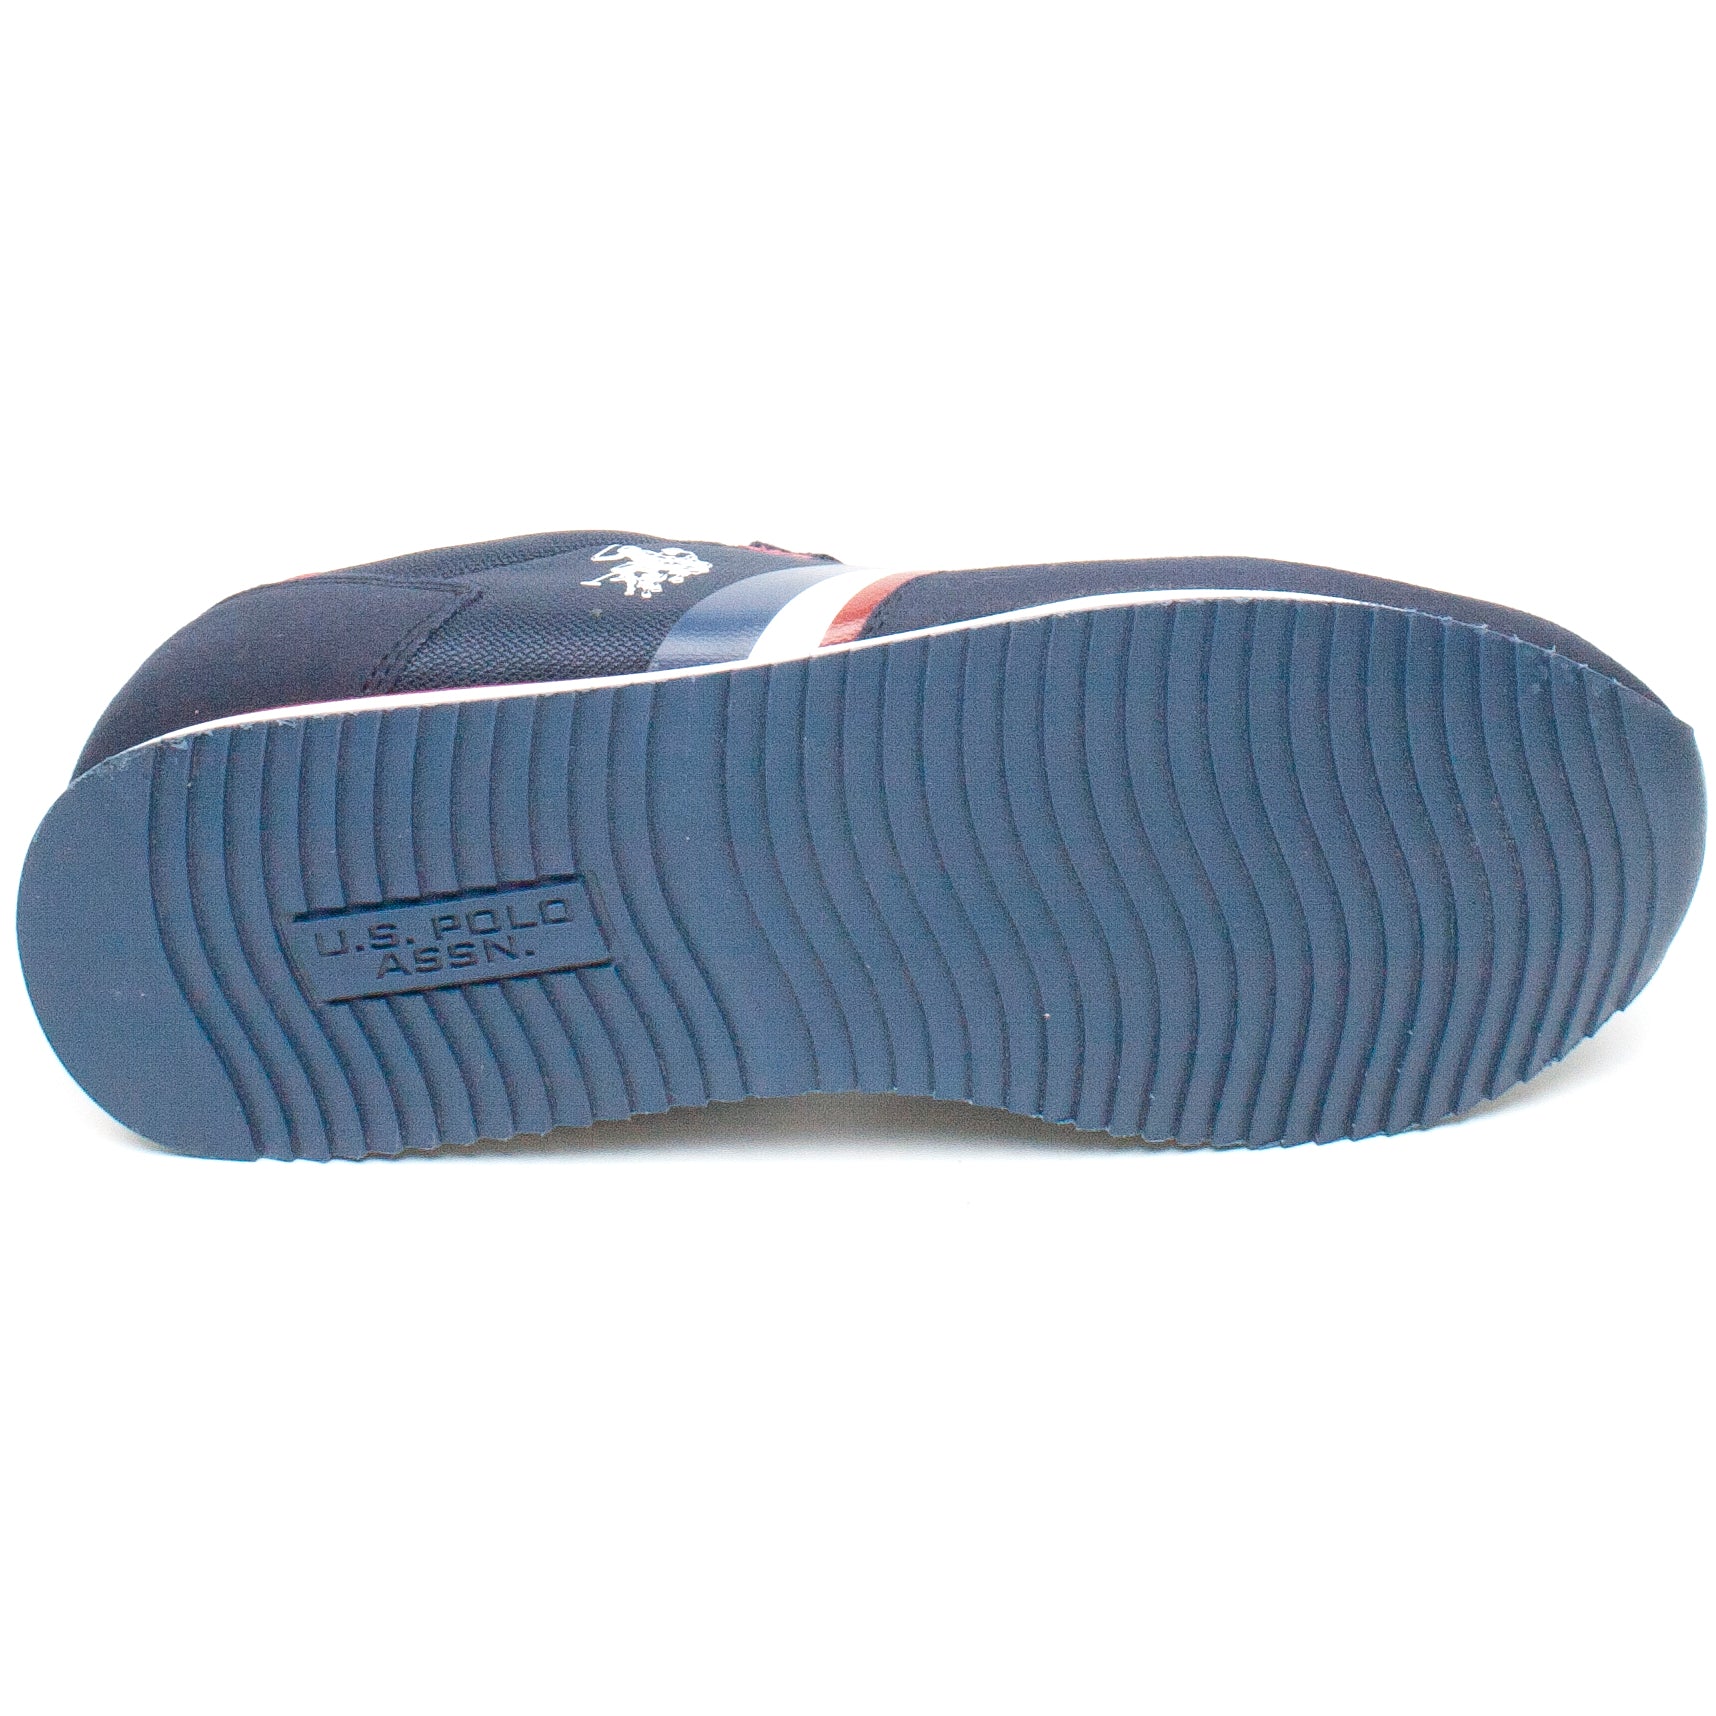 Polo pantofi barbati sport NOBIL001M/AHN1 bleumarin IB2206-BLM